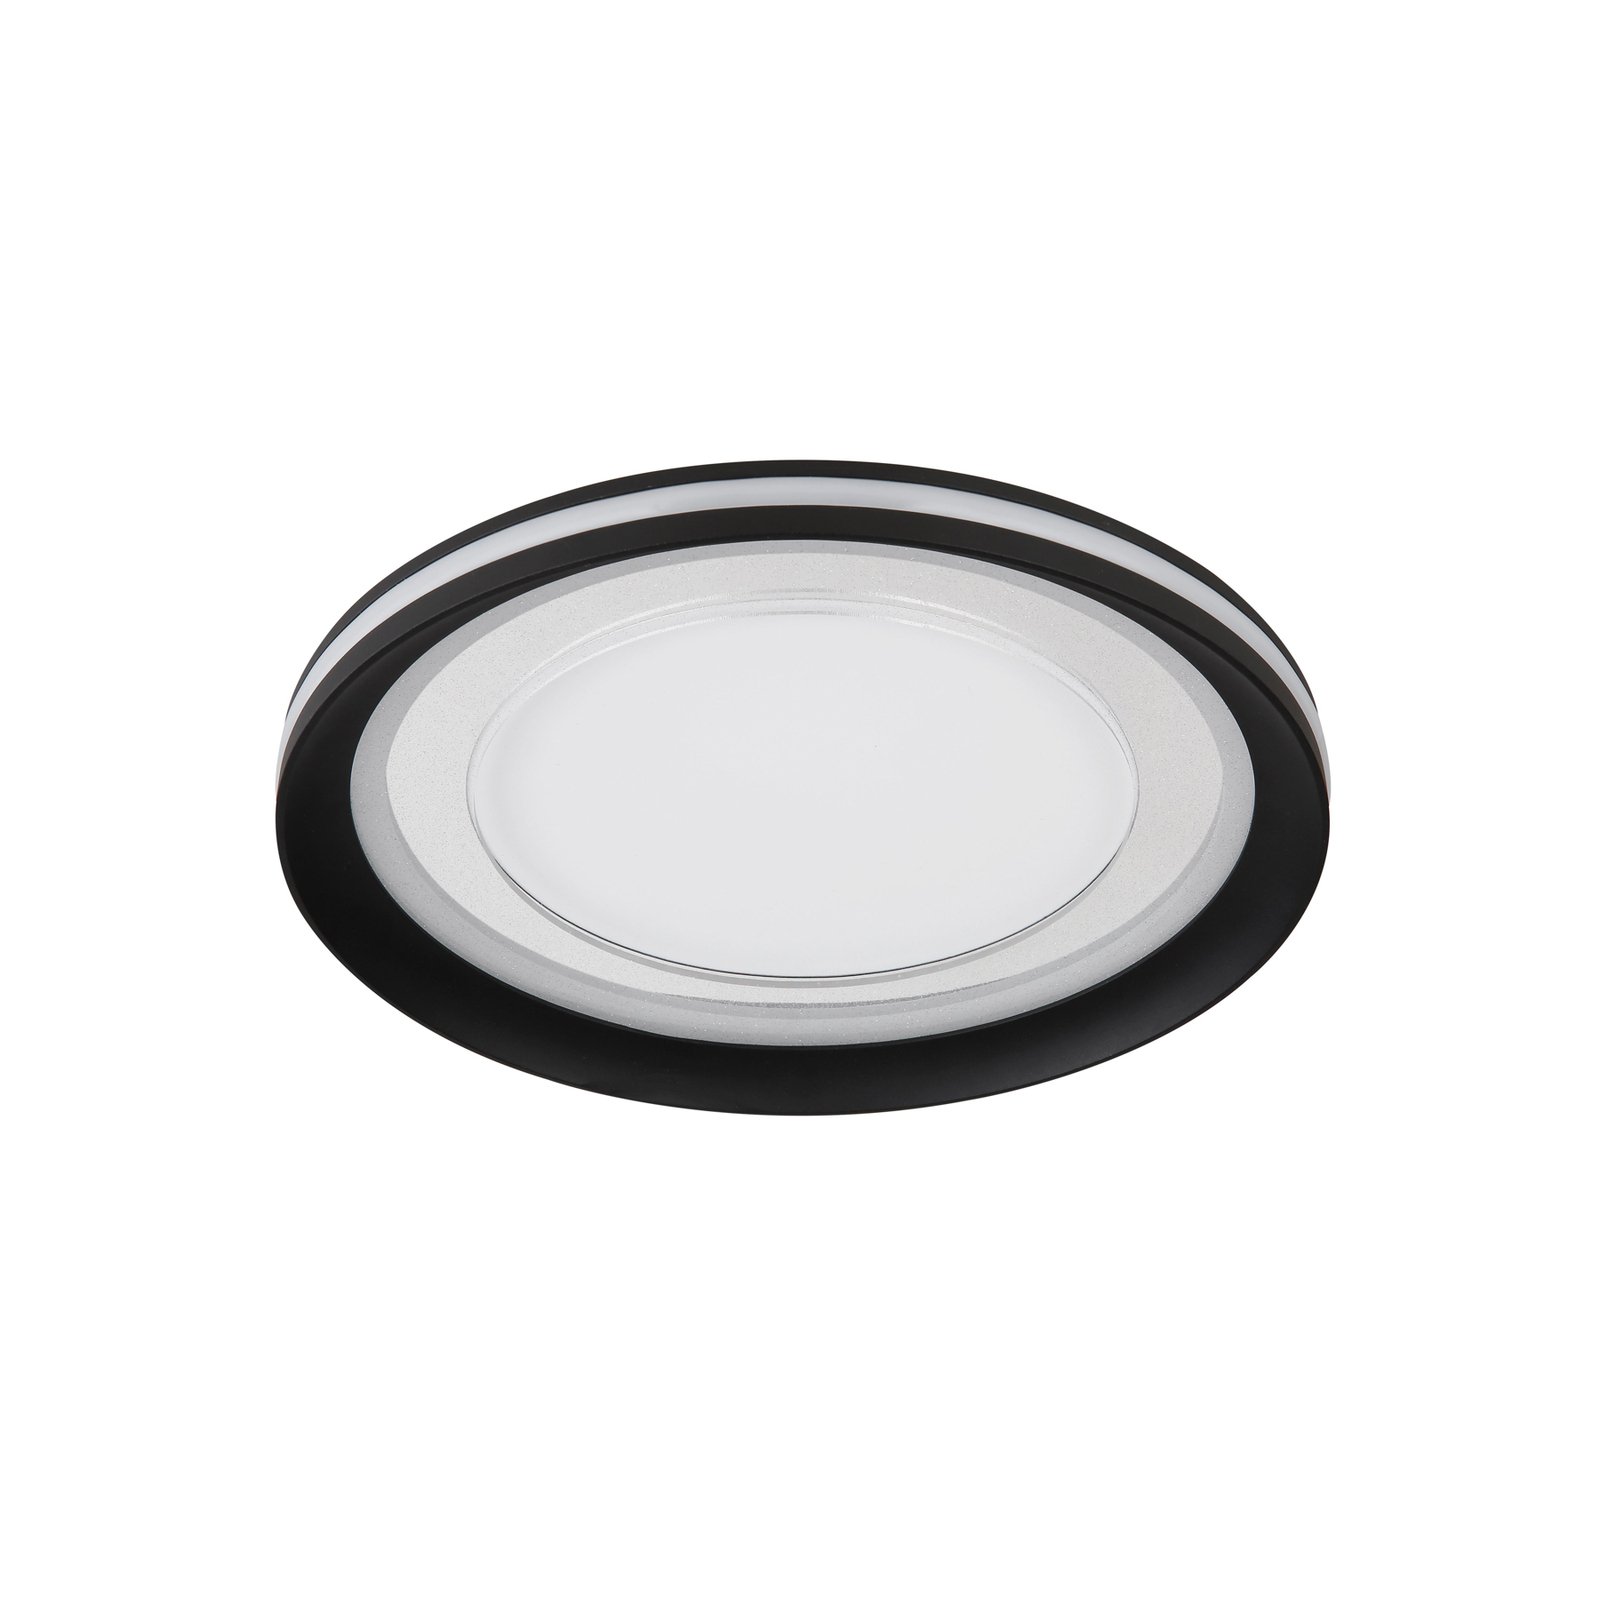 Clarino LED-taklampa, Ø 36 cm, svart/vit, akryl